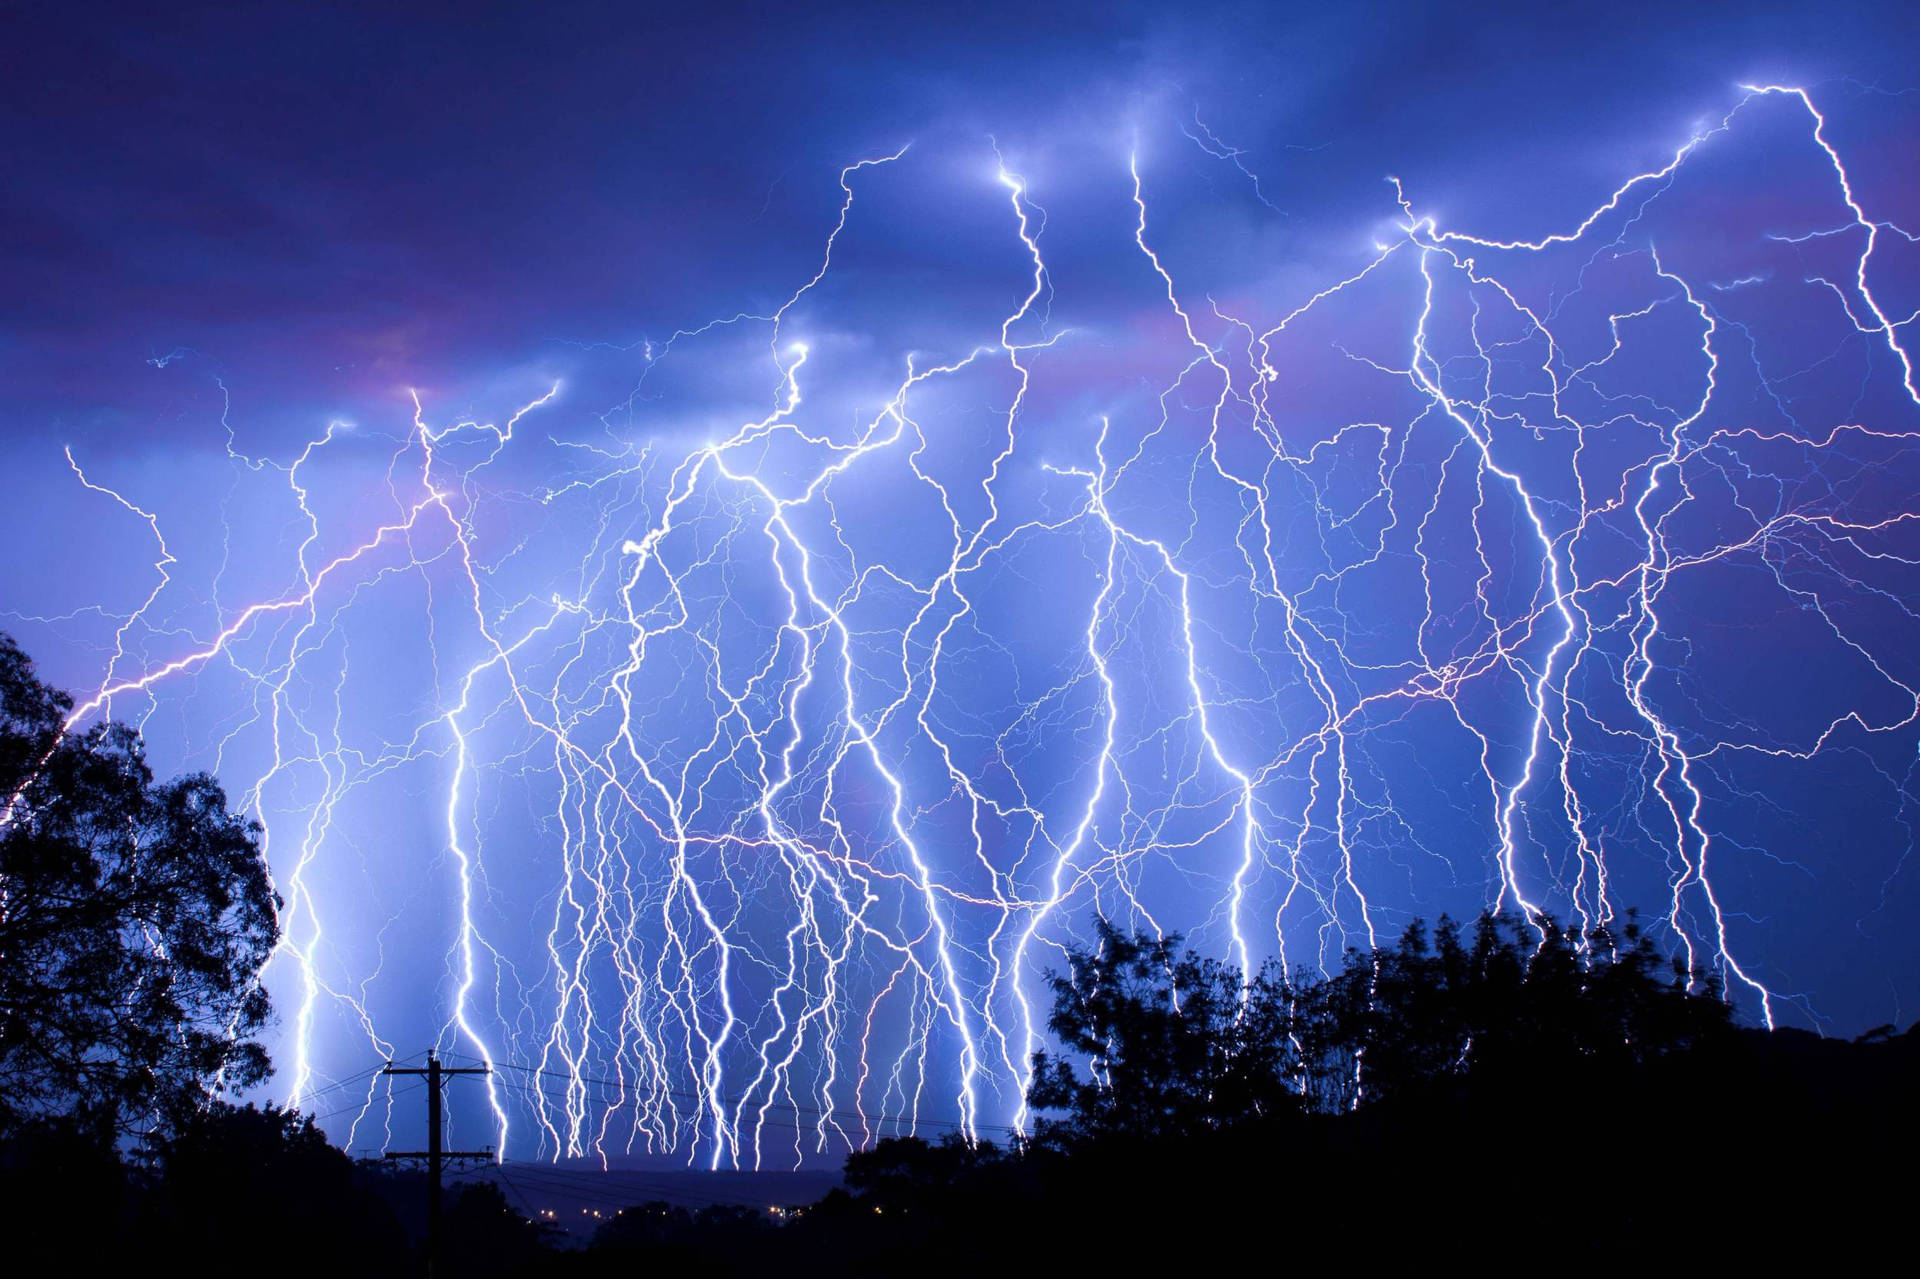 140818 Lightning Wallpaper Images Stock Photos  Vectors  Shutterstock